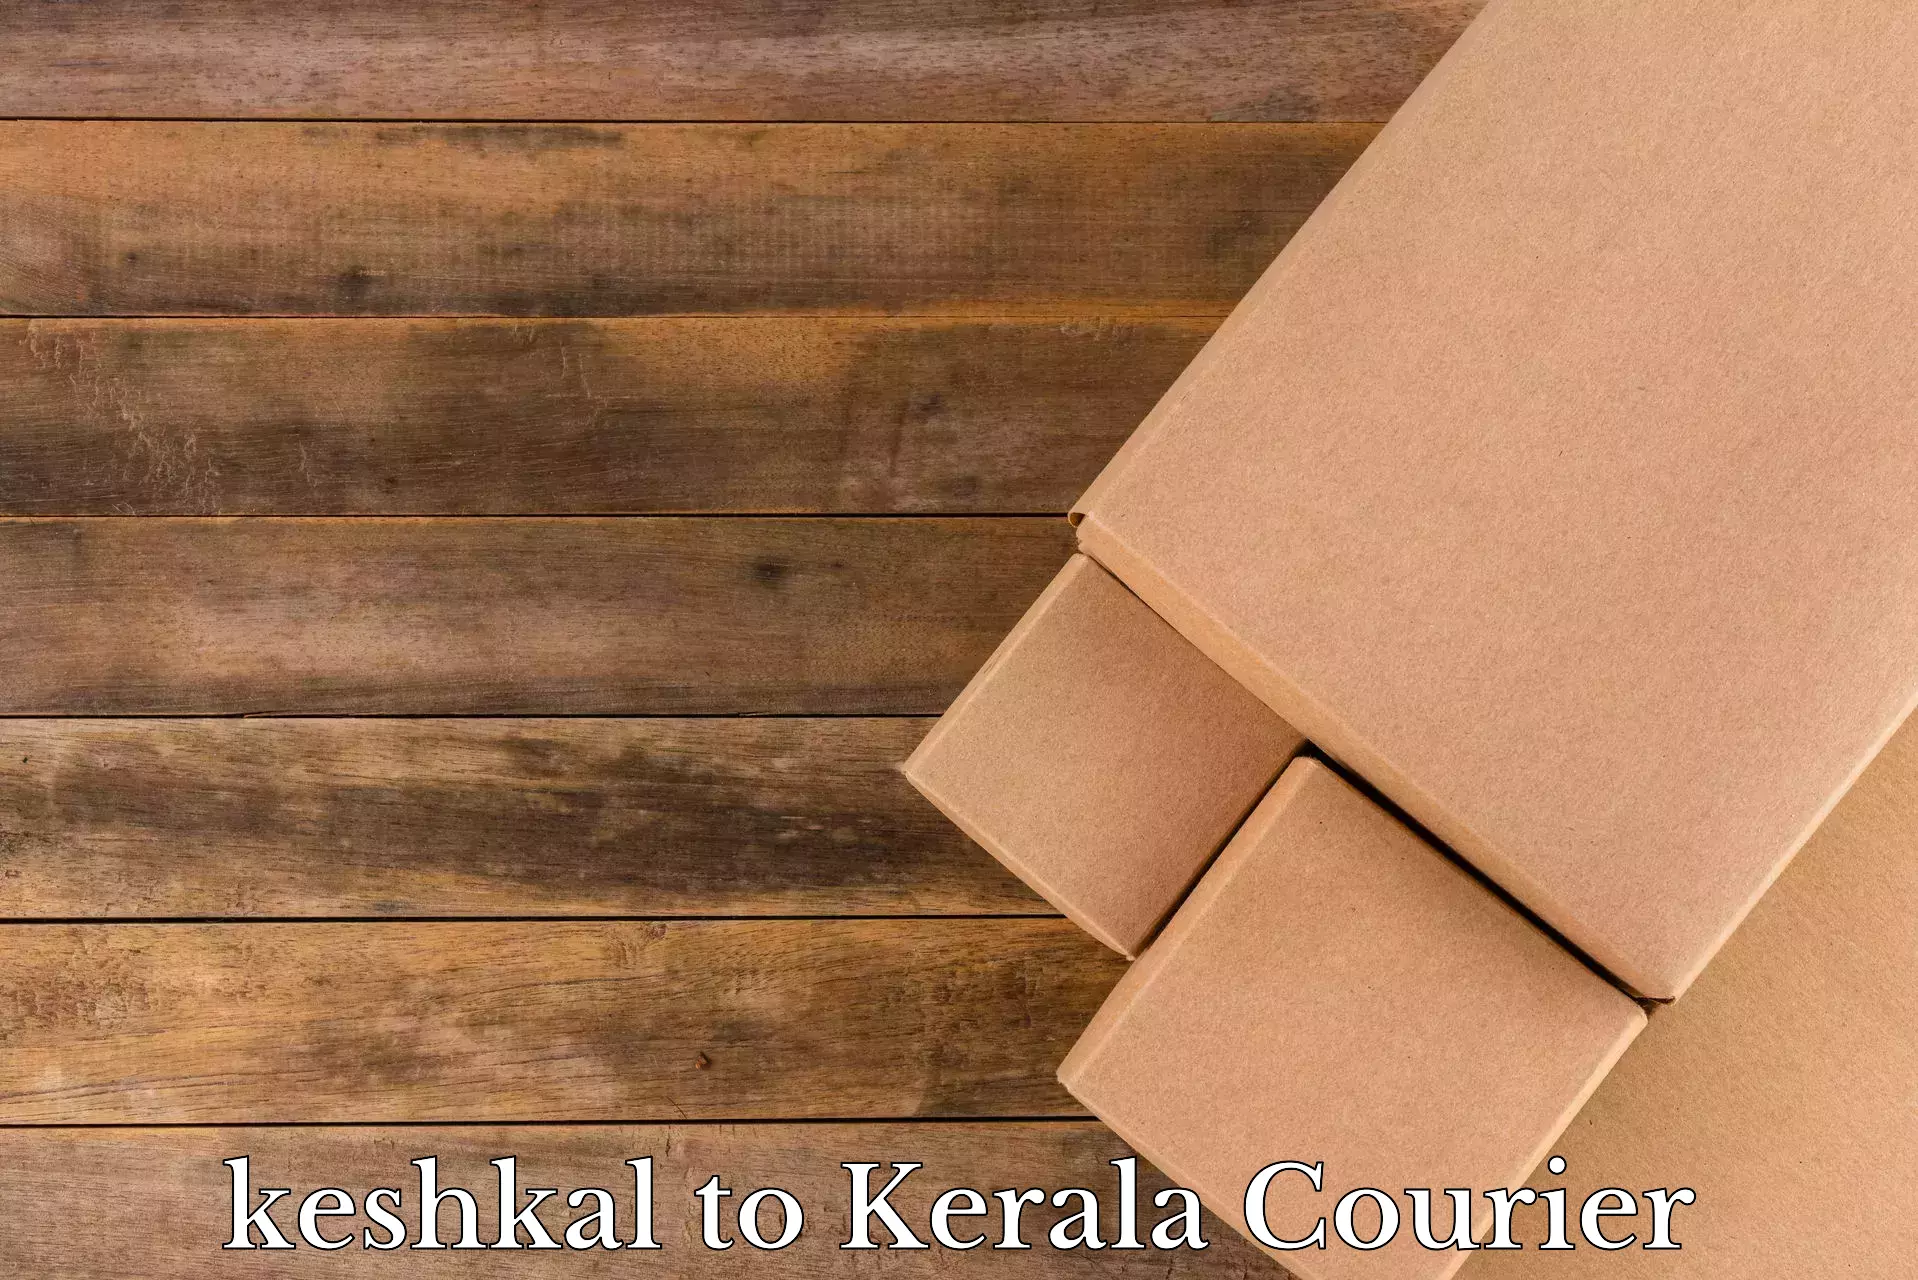 Full-service relocation keshkal to Akaloor